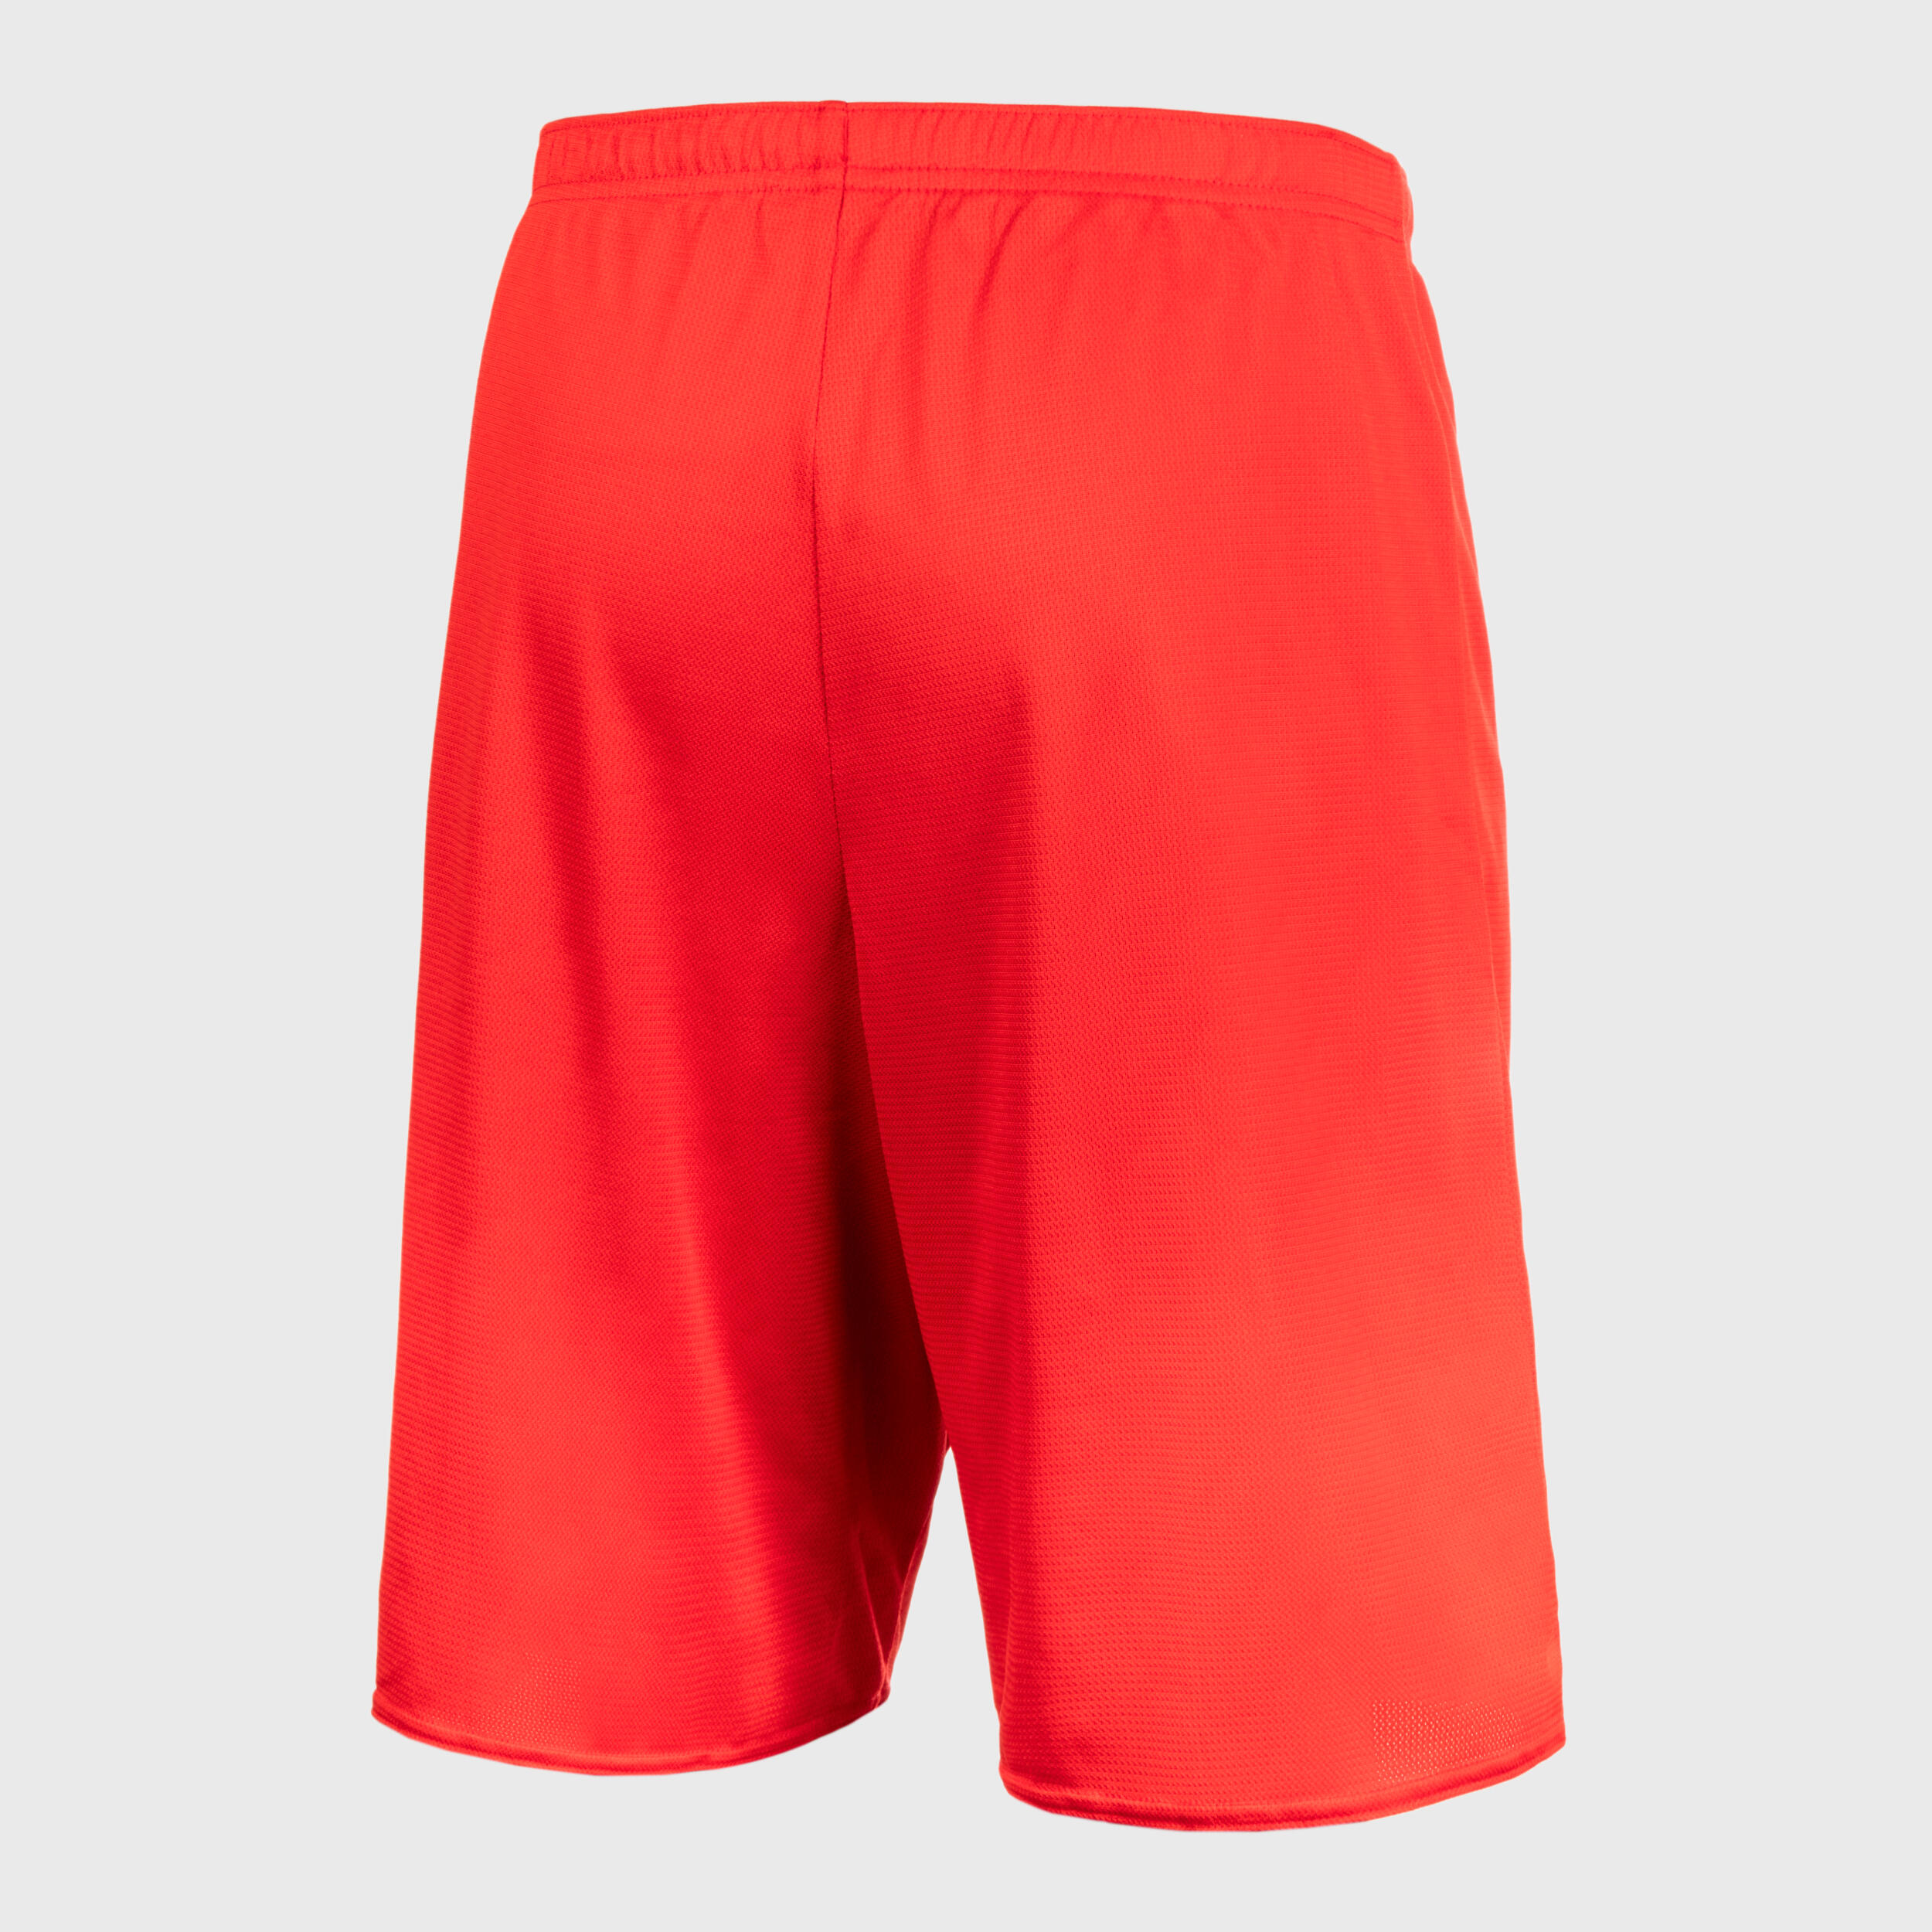 Adult Basketball Shorts SH100 - Red 5/6